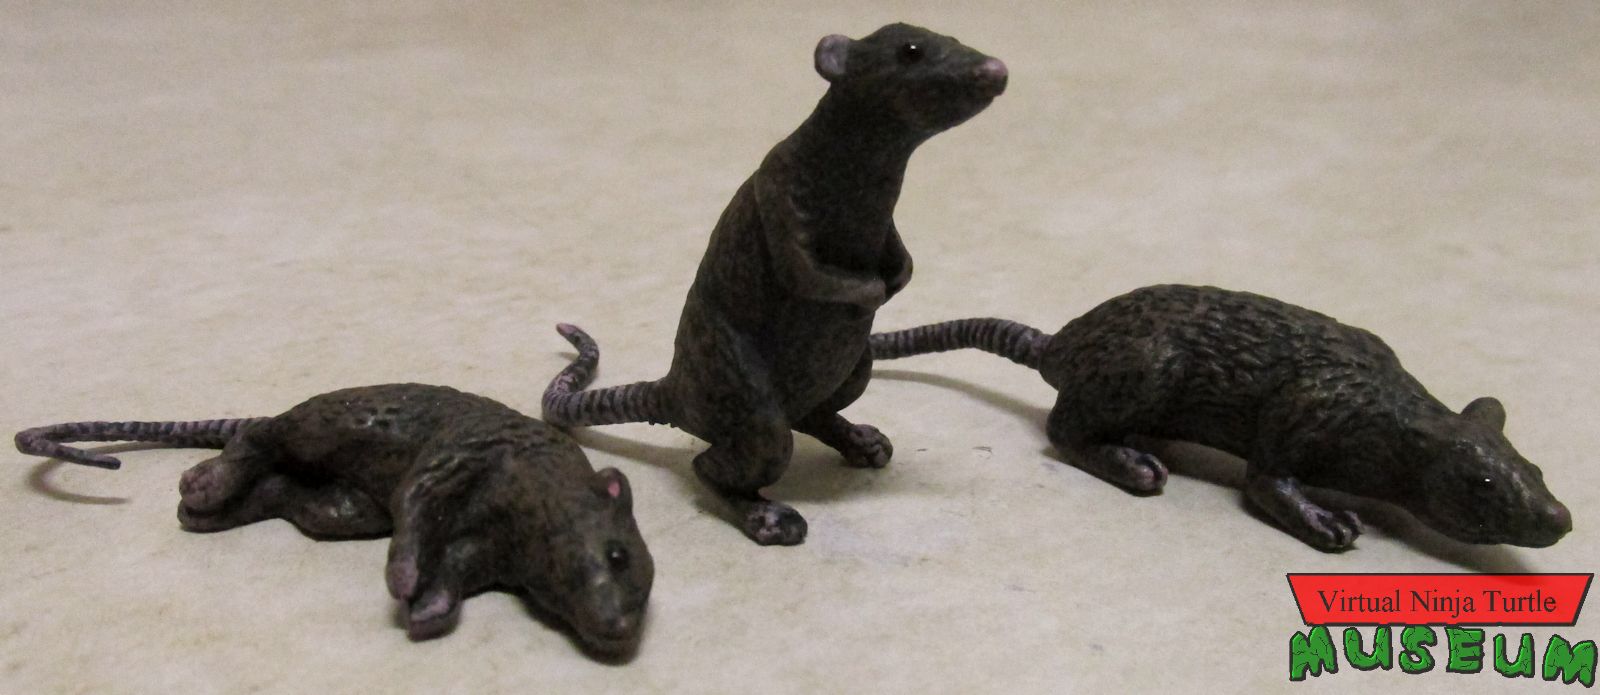 Mouser rat accessories